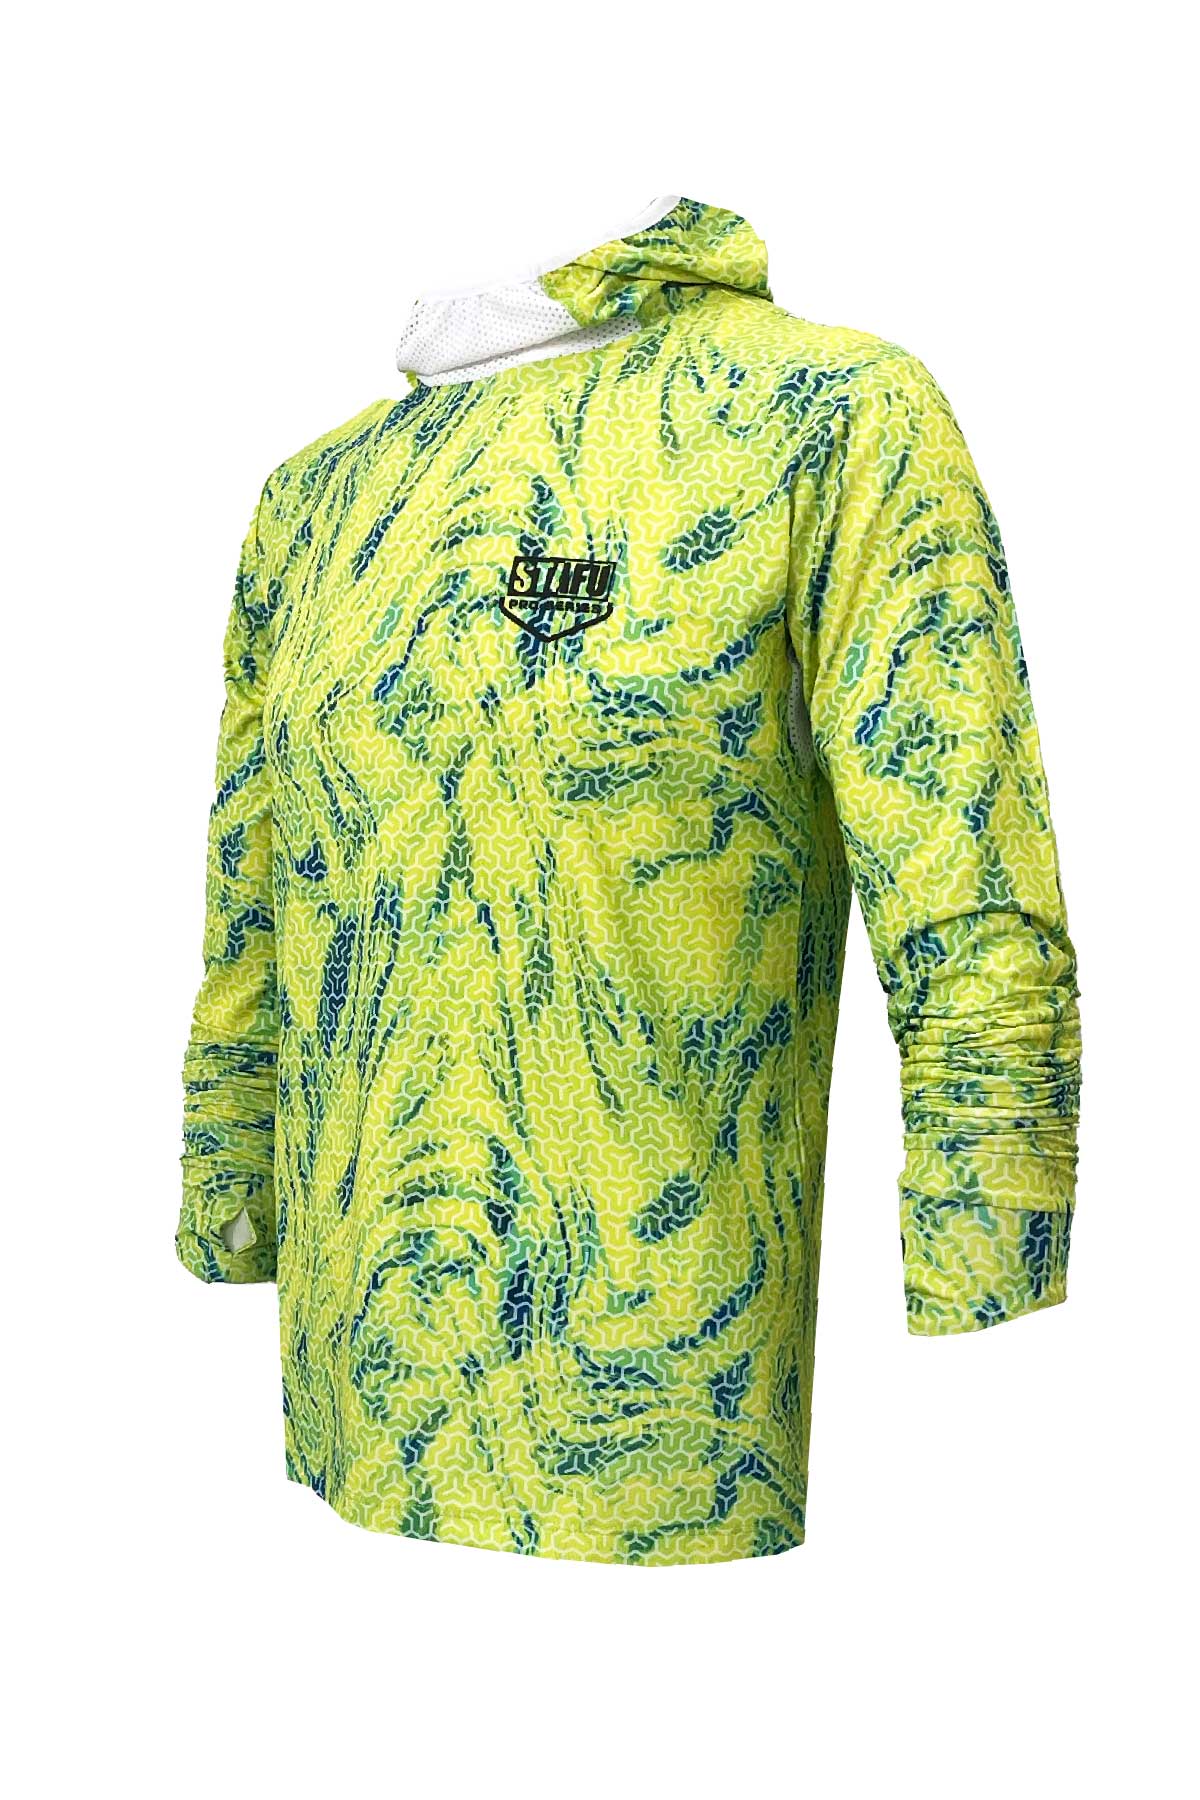 Haka Hooded Long Sleeve Fishing Shirt - Trophy - Lime